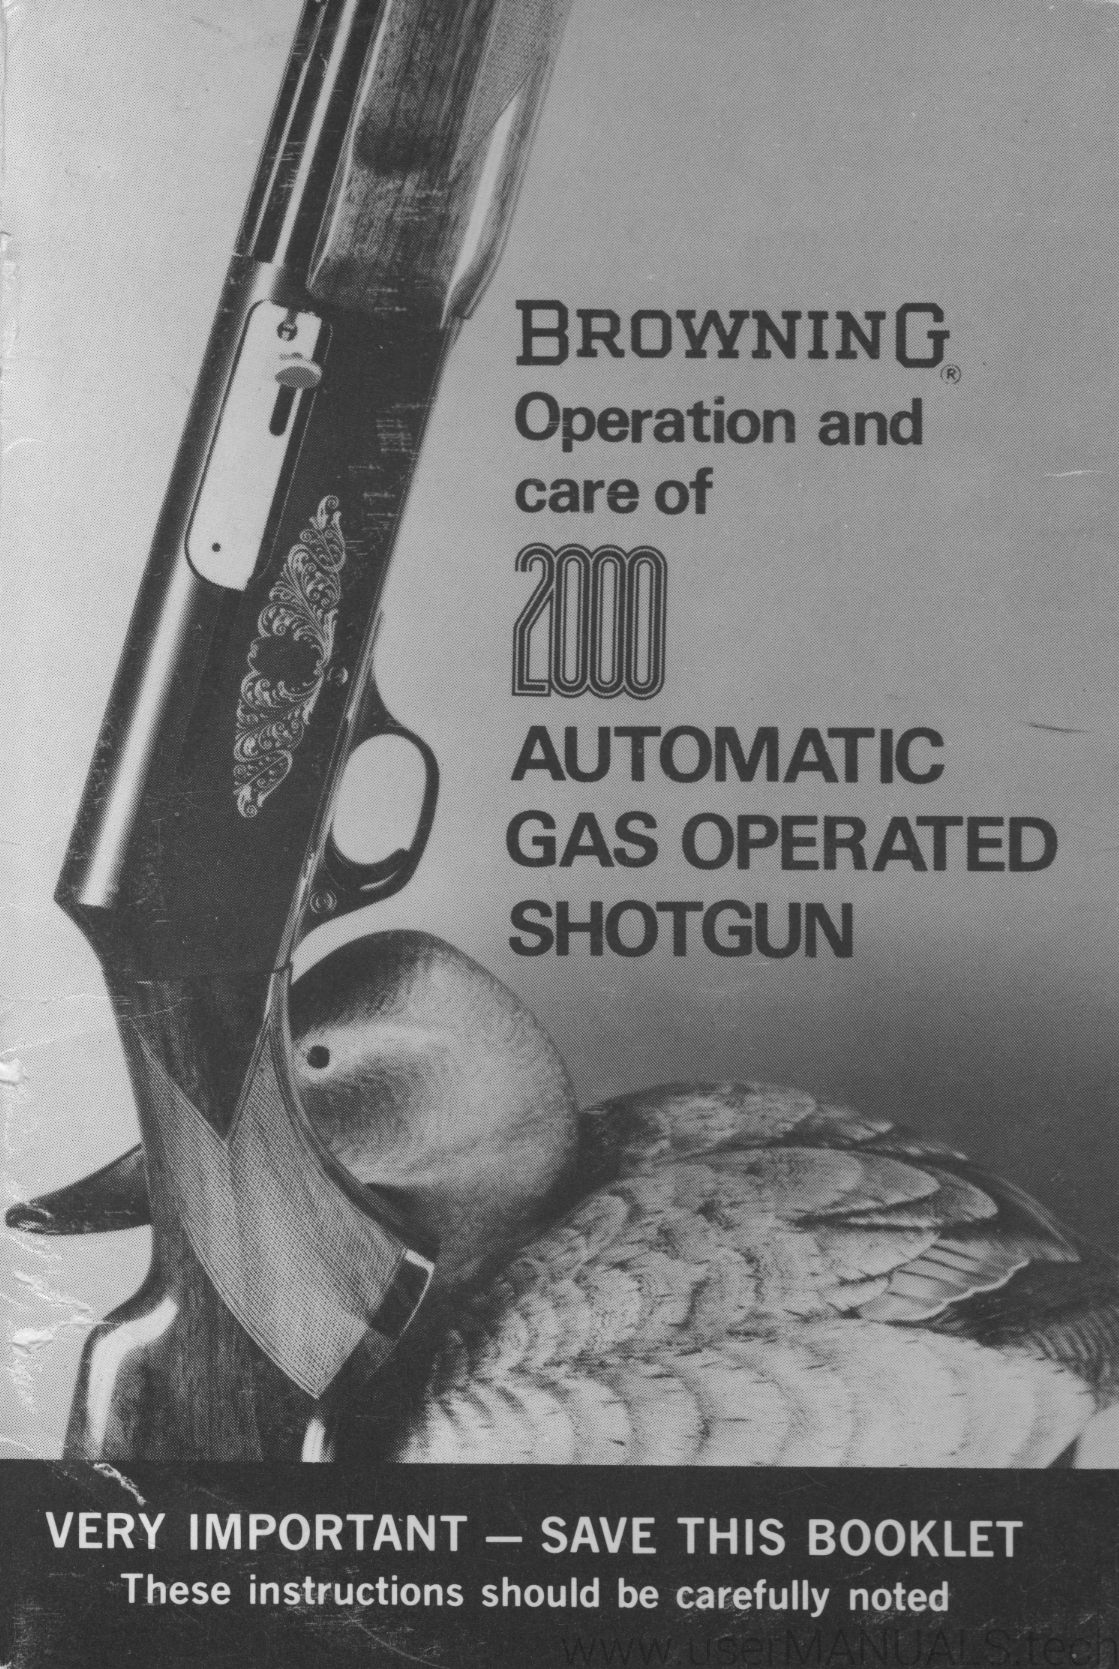 Browning fn m 150 manual